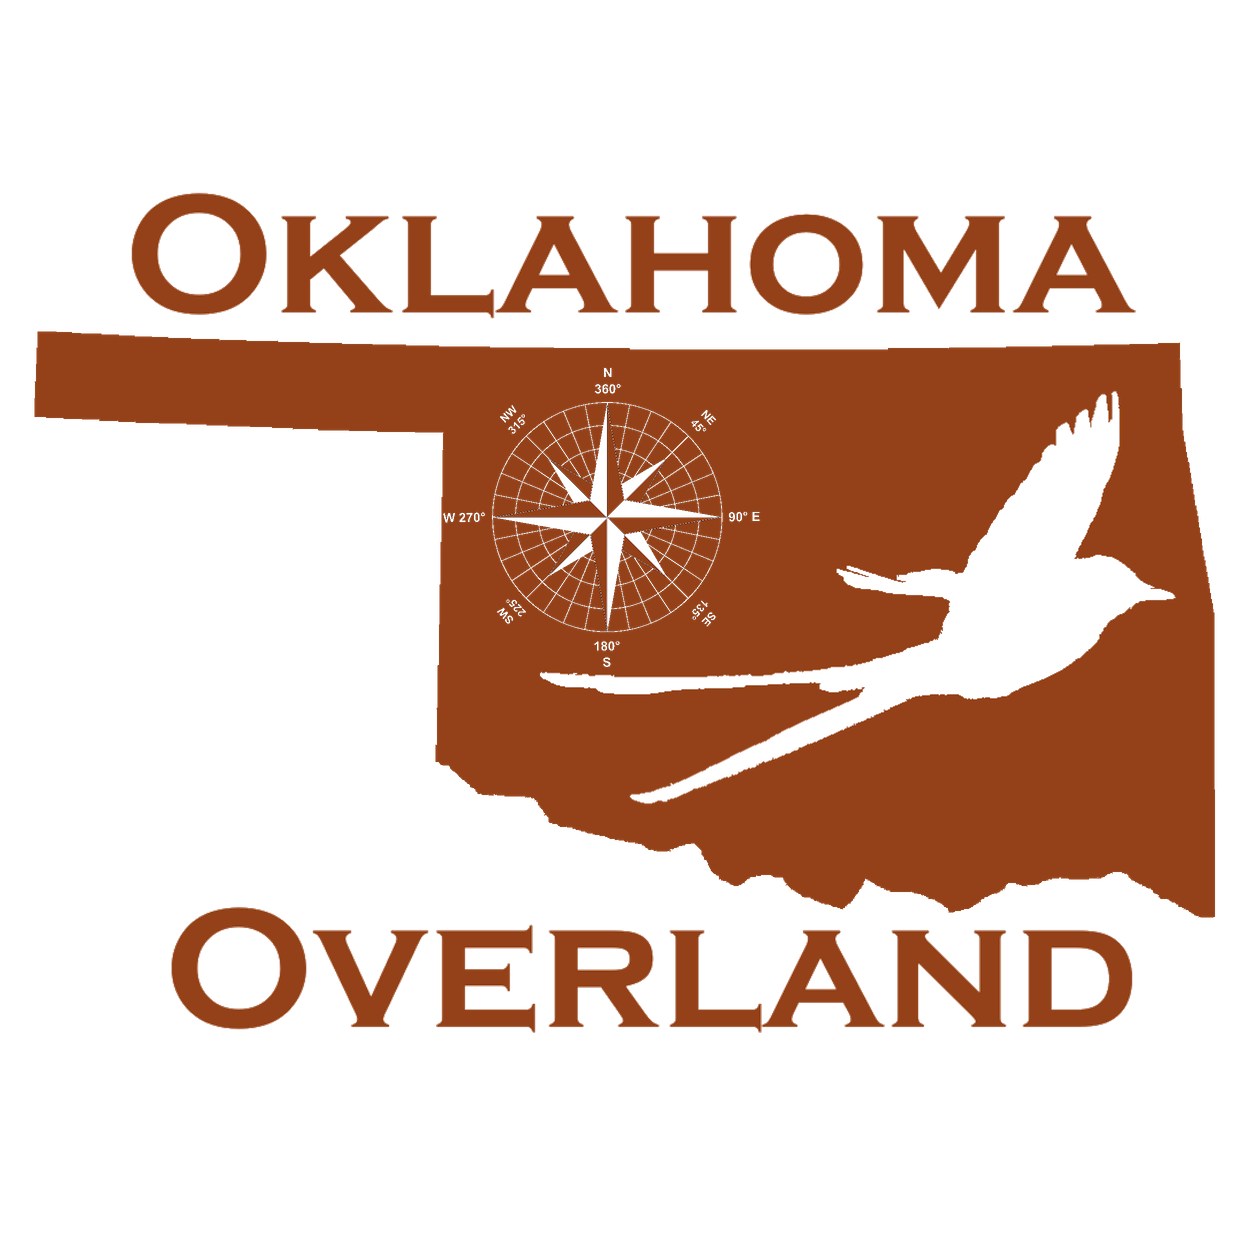 Oklahoma Overland